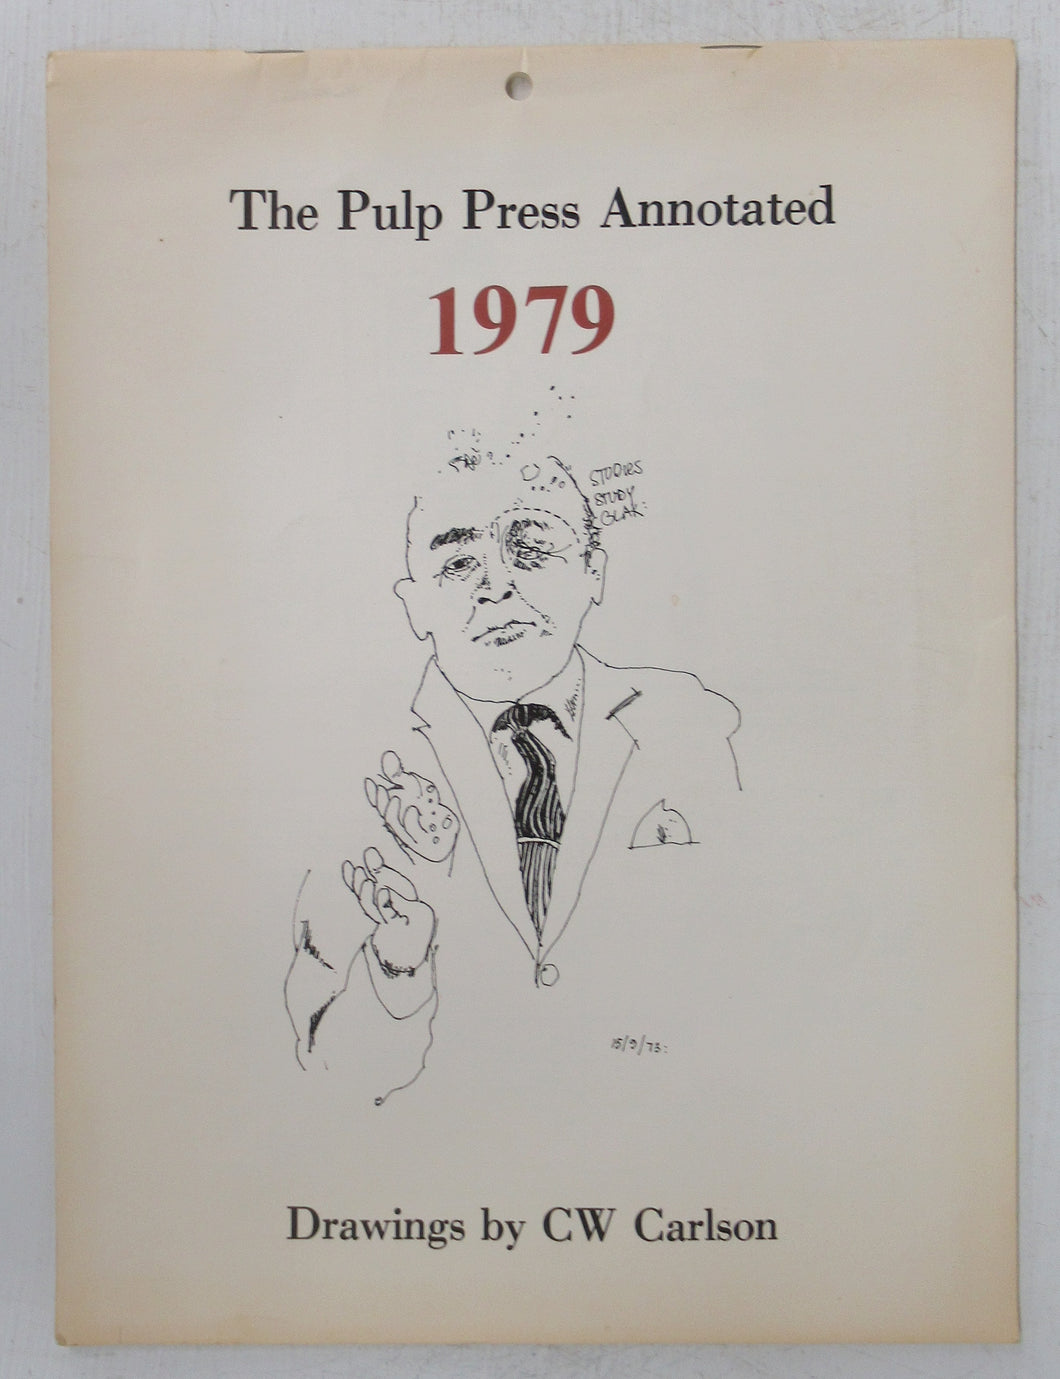 The Pulp Press Annotated 1979 calendar